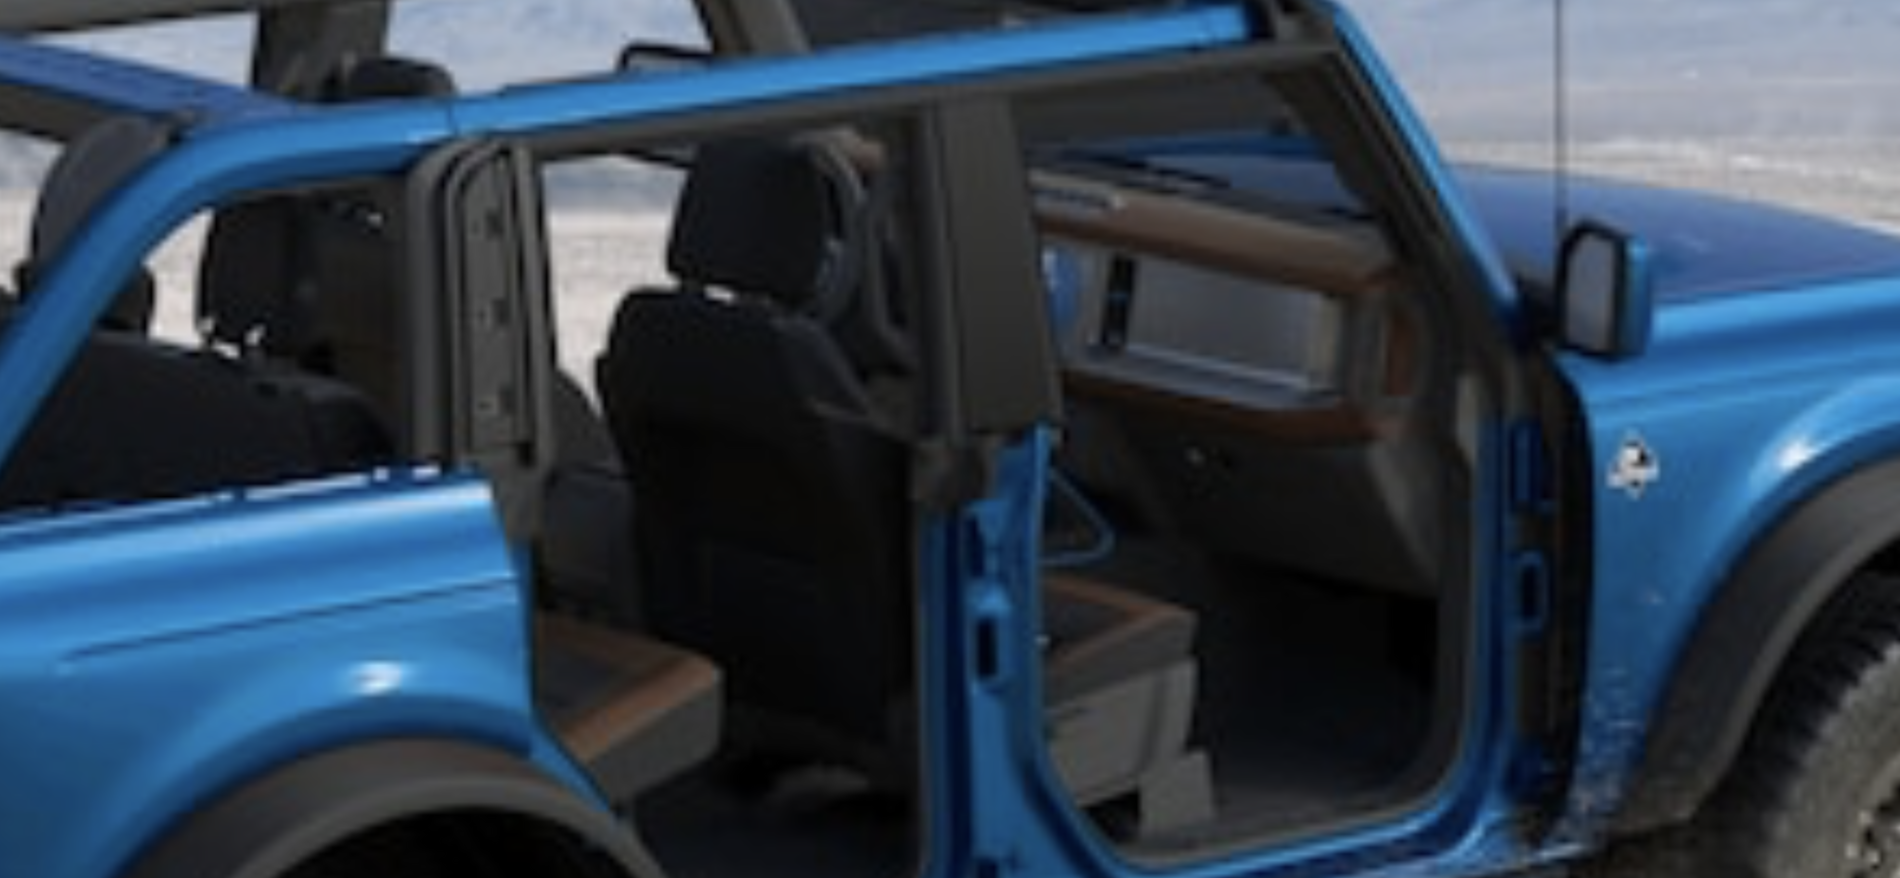 Ford Bronco Velocity Blue - Still Late Availability? 90F32D89-0006-4CB7-A060-C1FB3711C45F